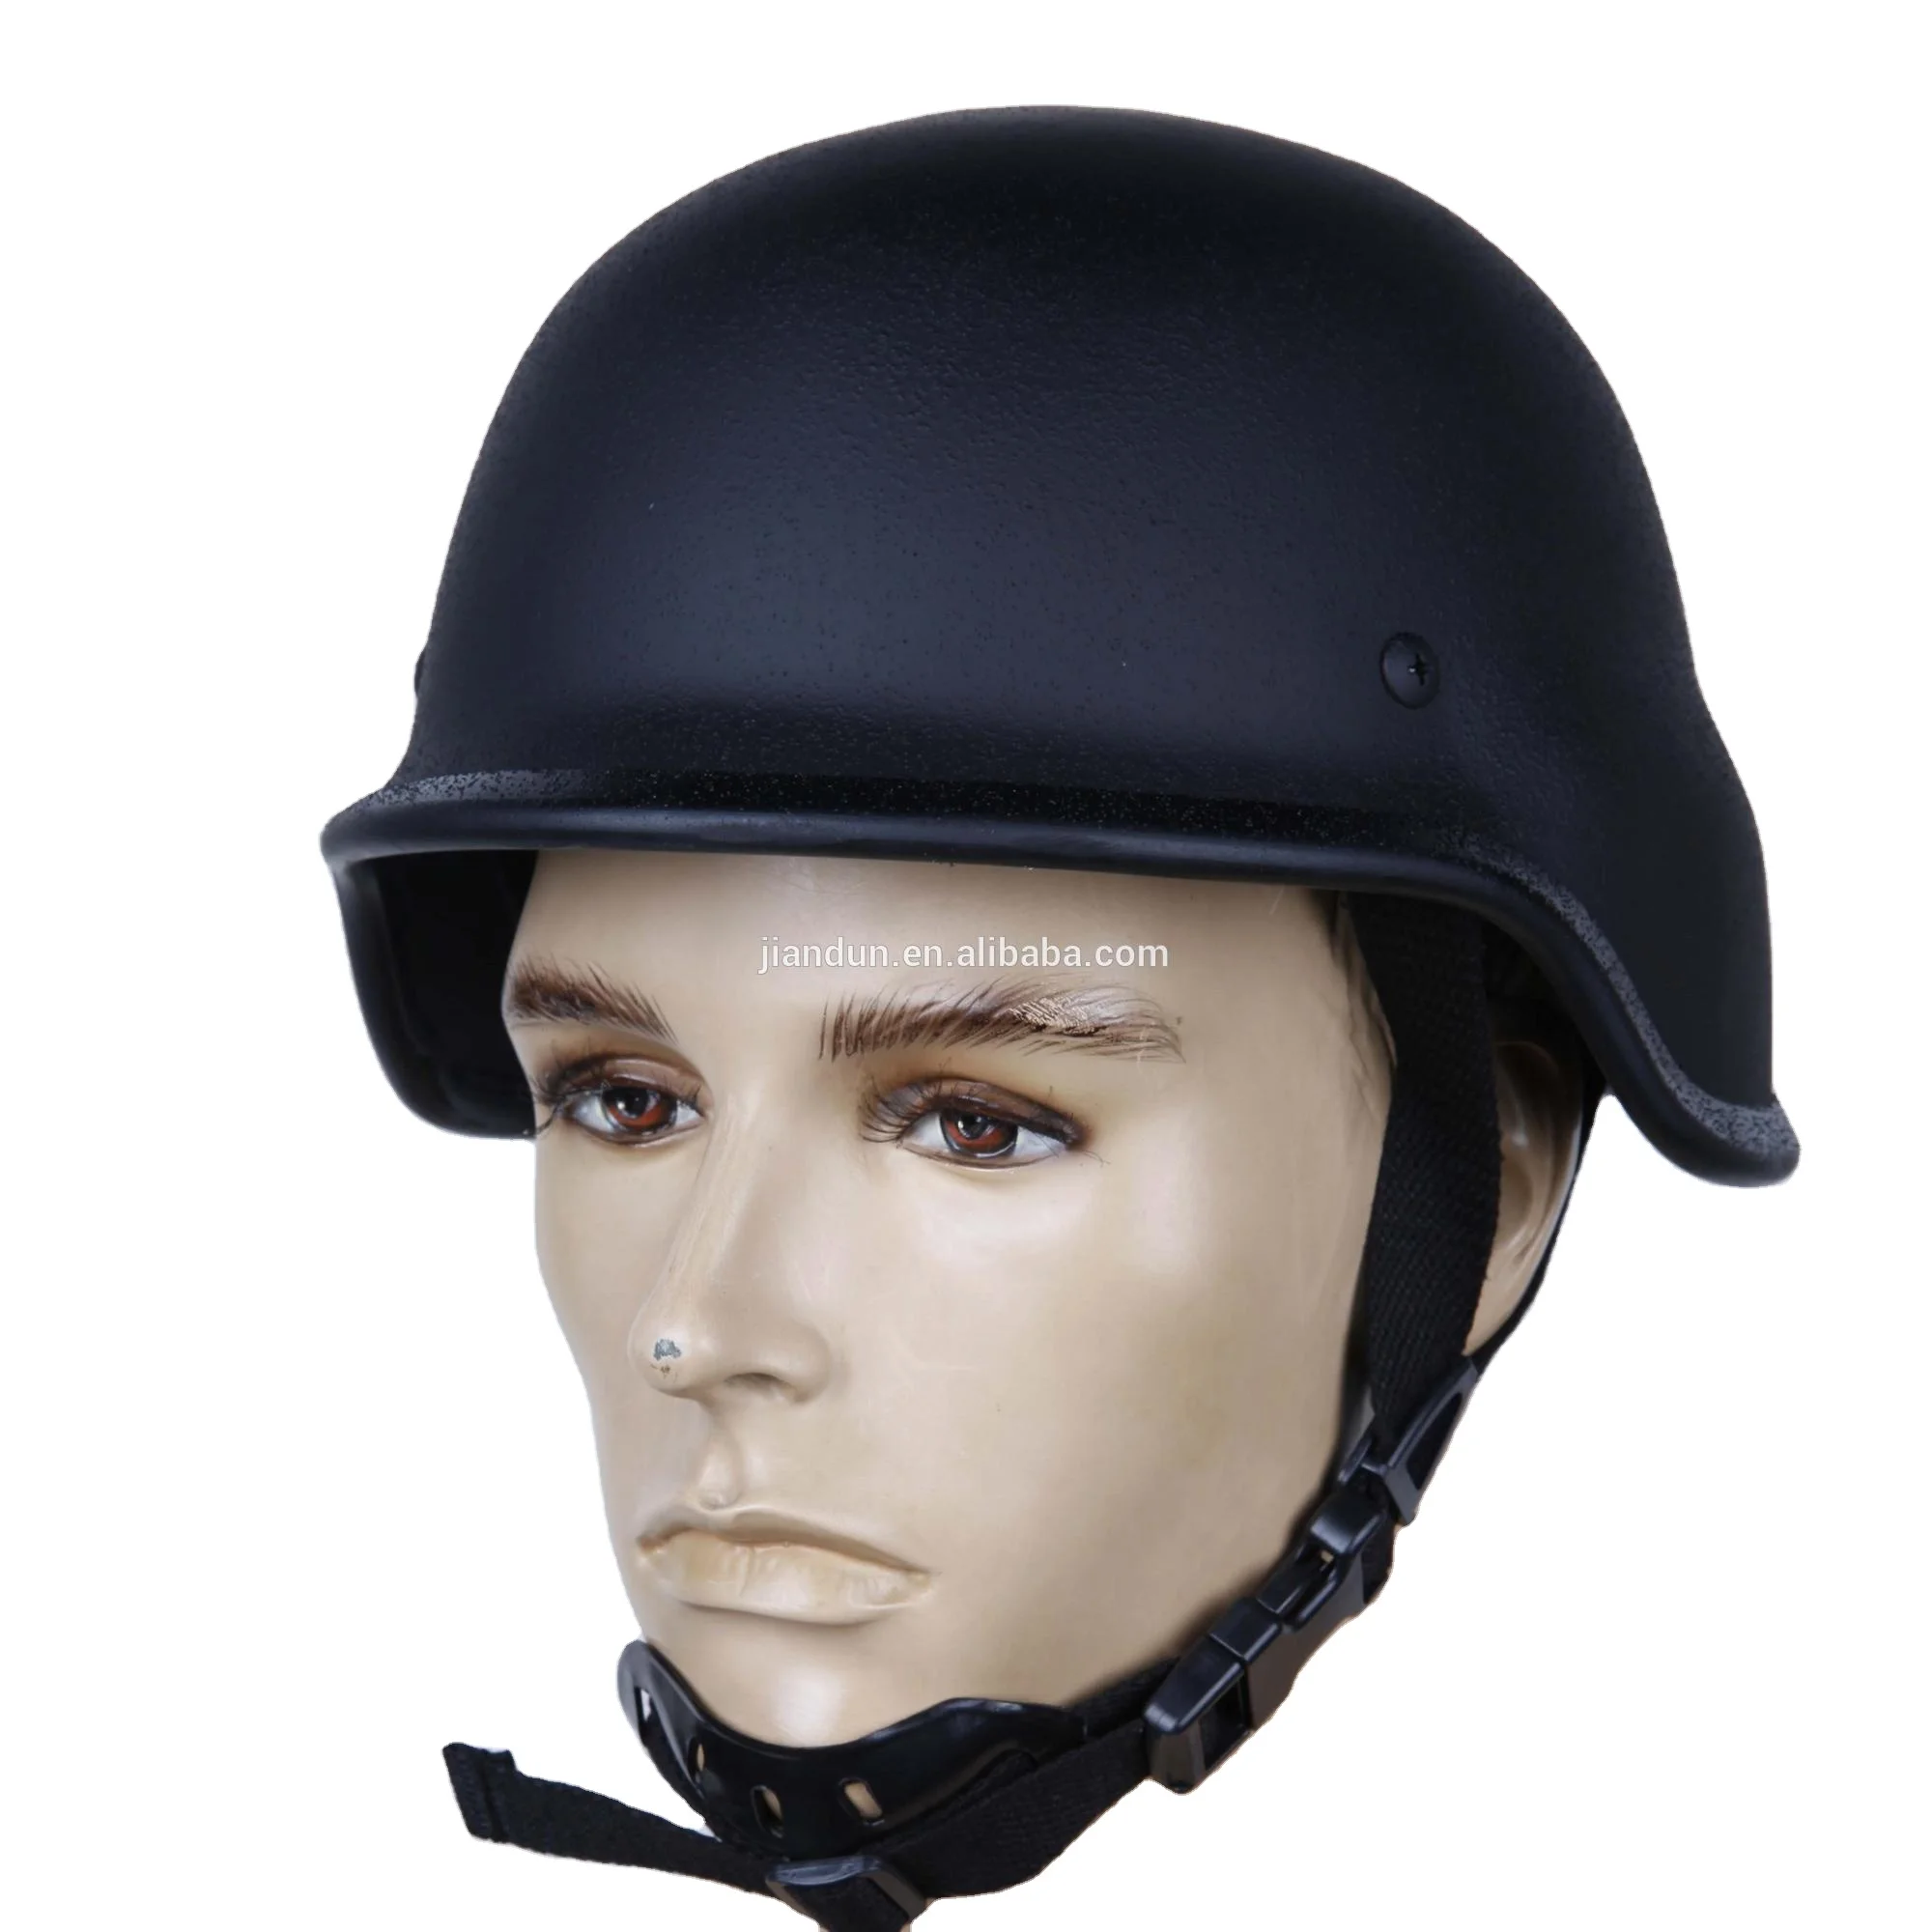 
High Threats Protection NIJ IIIA 0101.06 Bullet Stop 9mm .44 Army Police Military Equipment Combat Bulletproof Aramid Helmet 